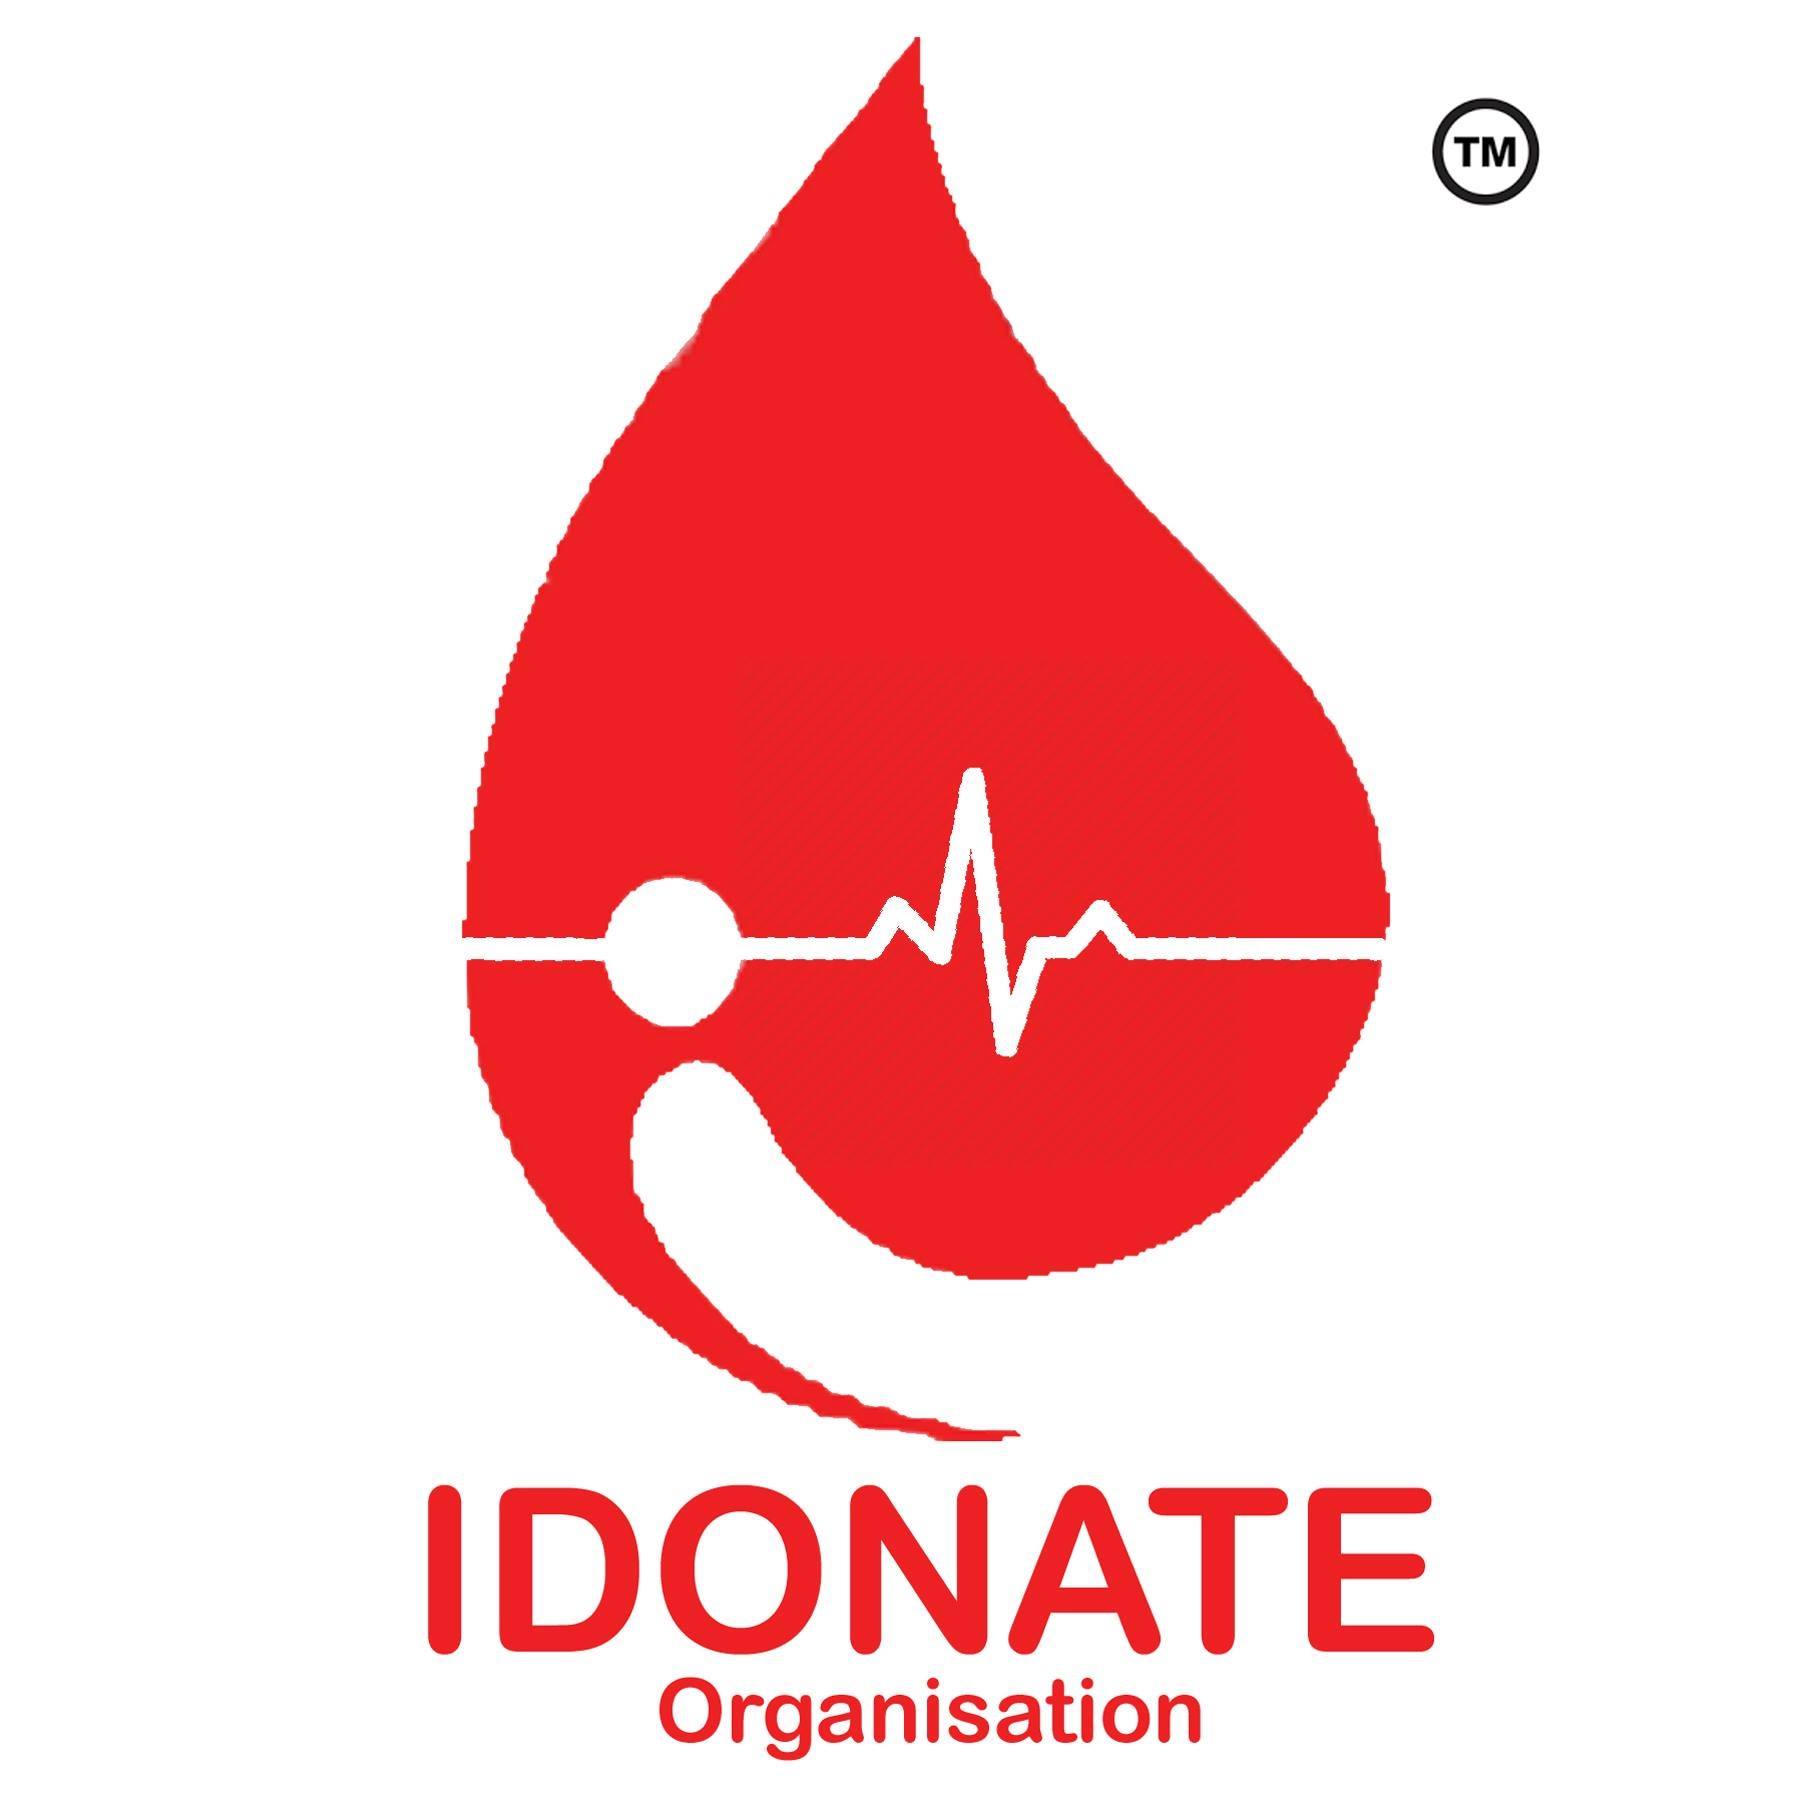 I Donate Organisation